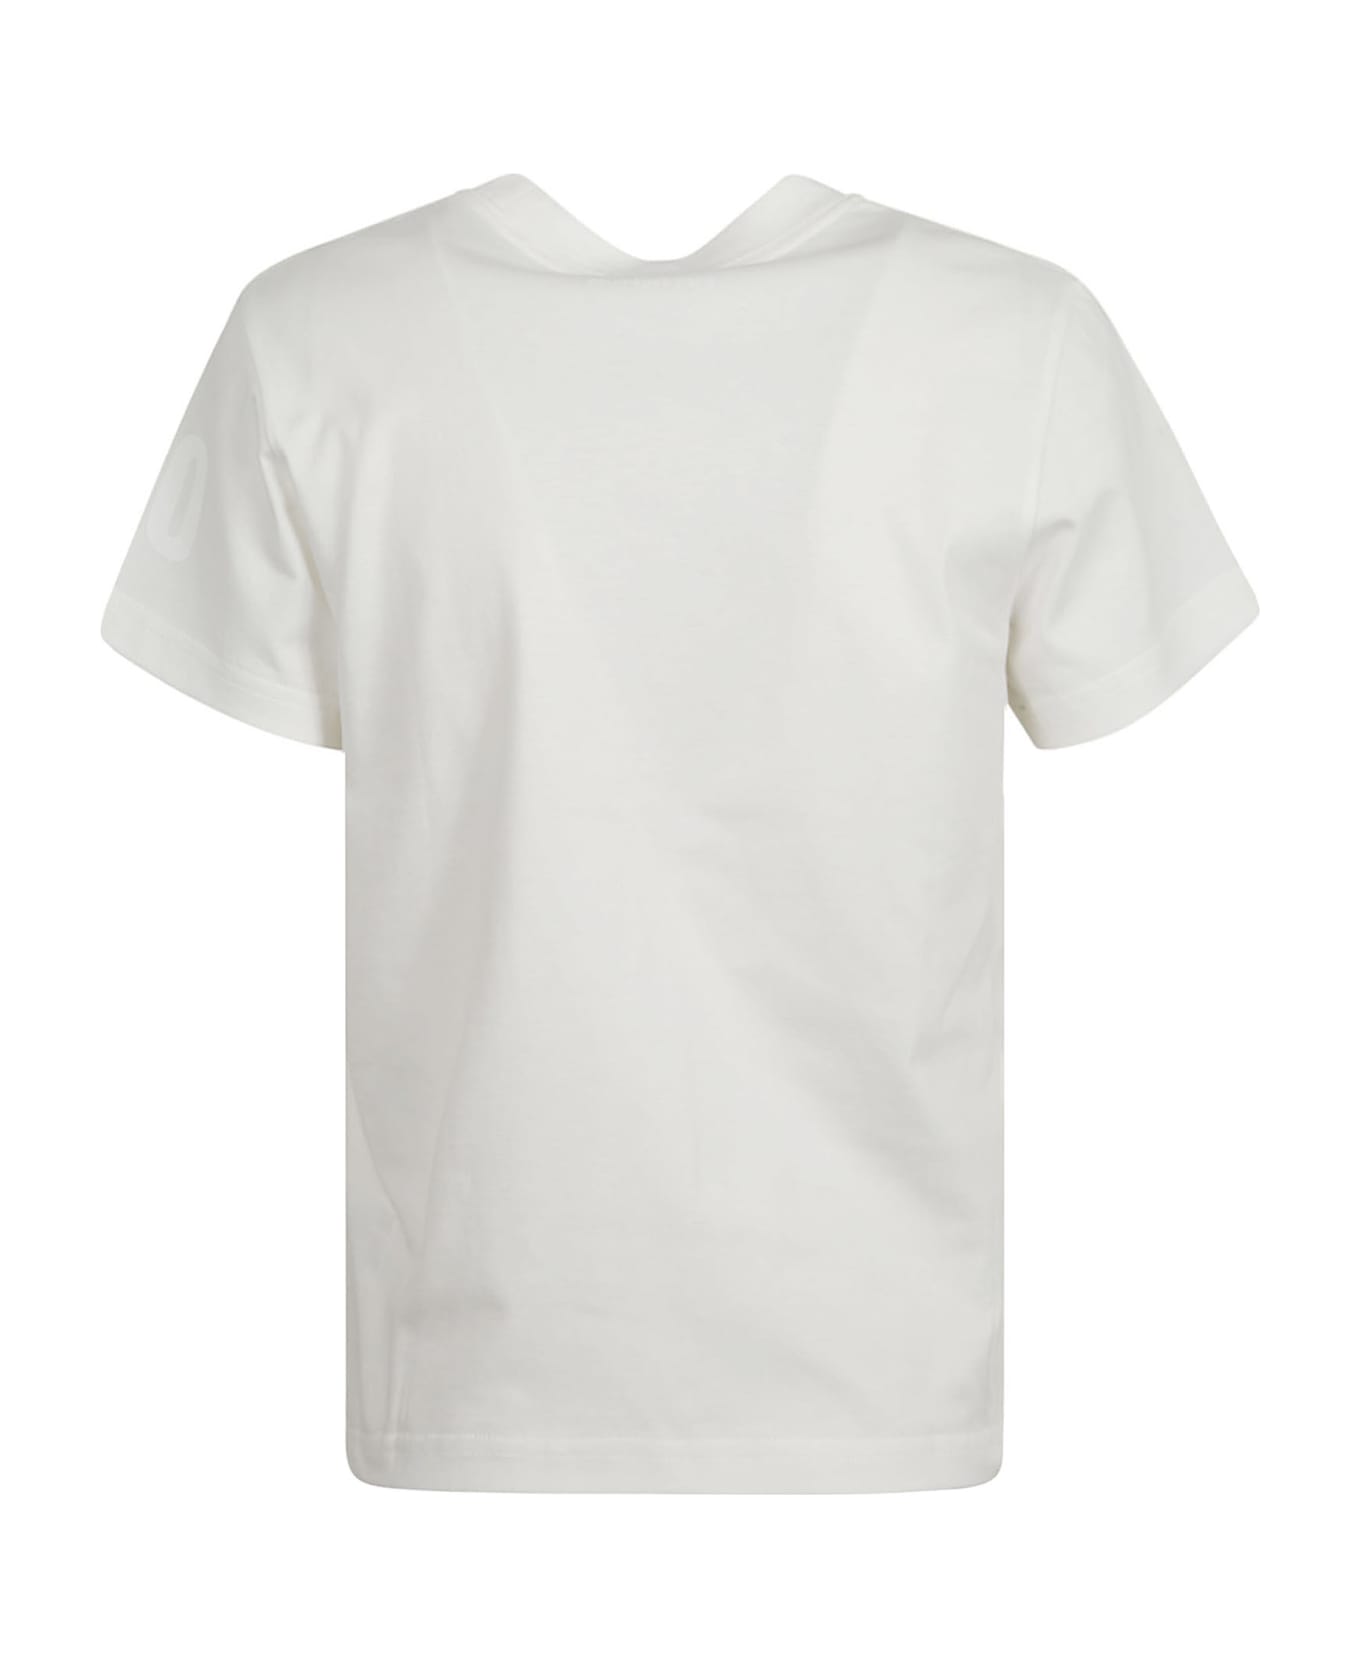 Courrèges Logo Print Round Neck T-shirt - Heritage Tシャツ